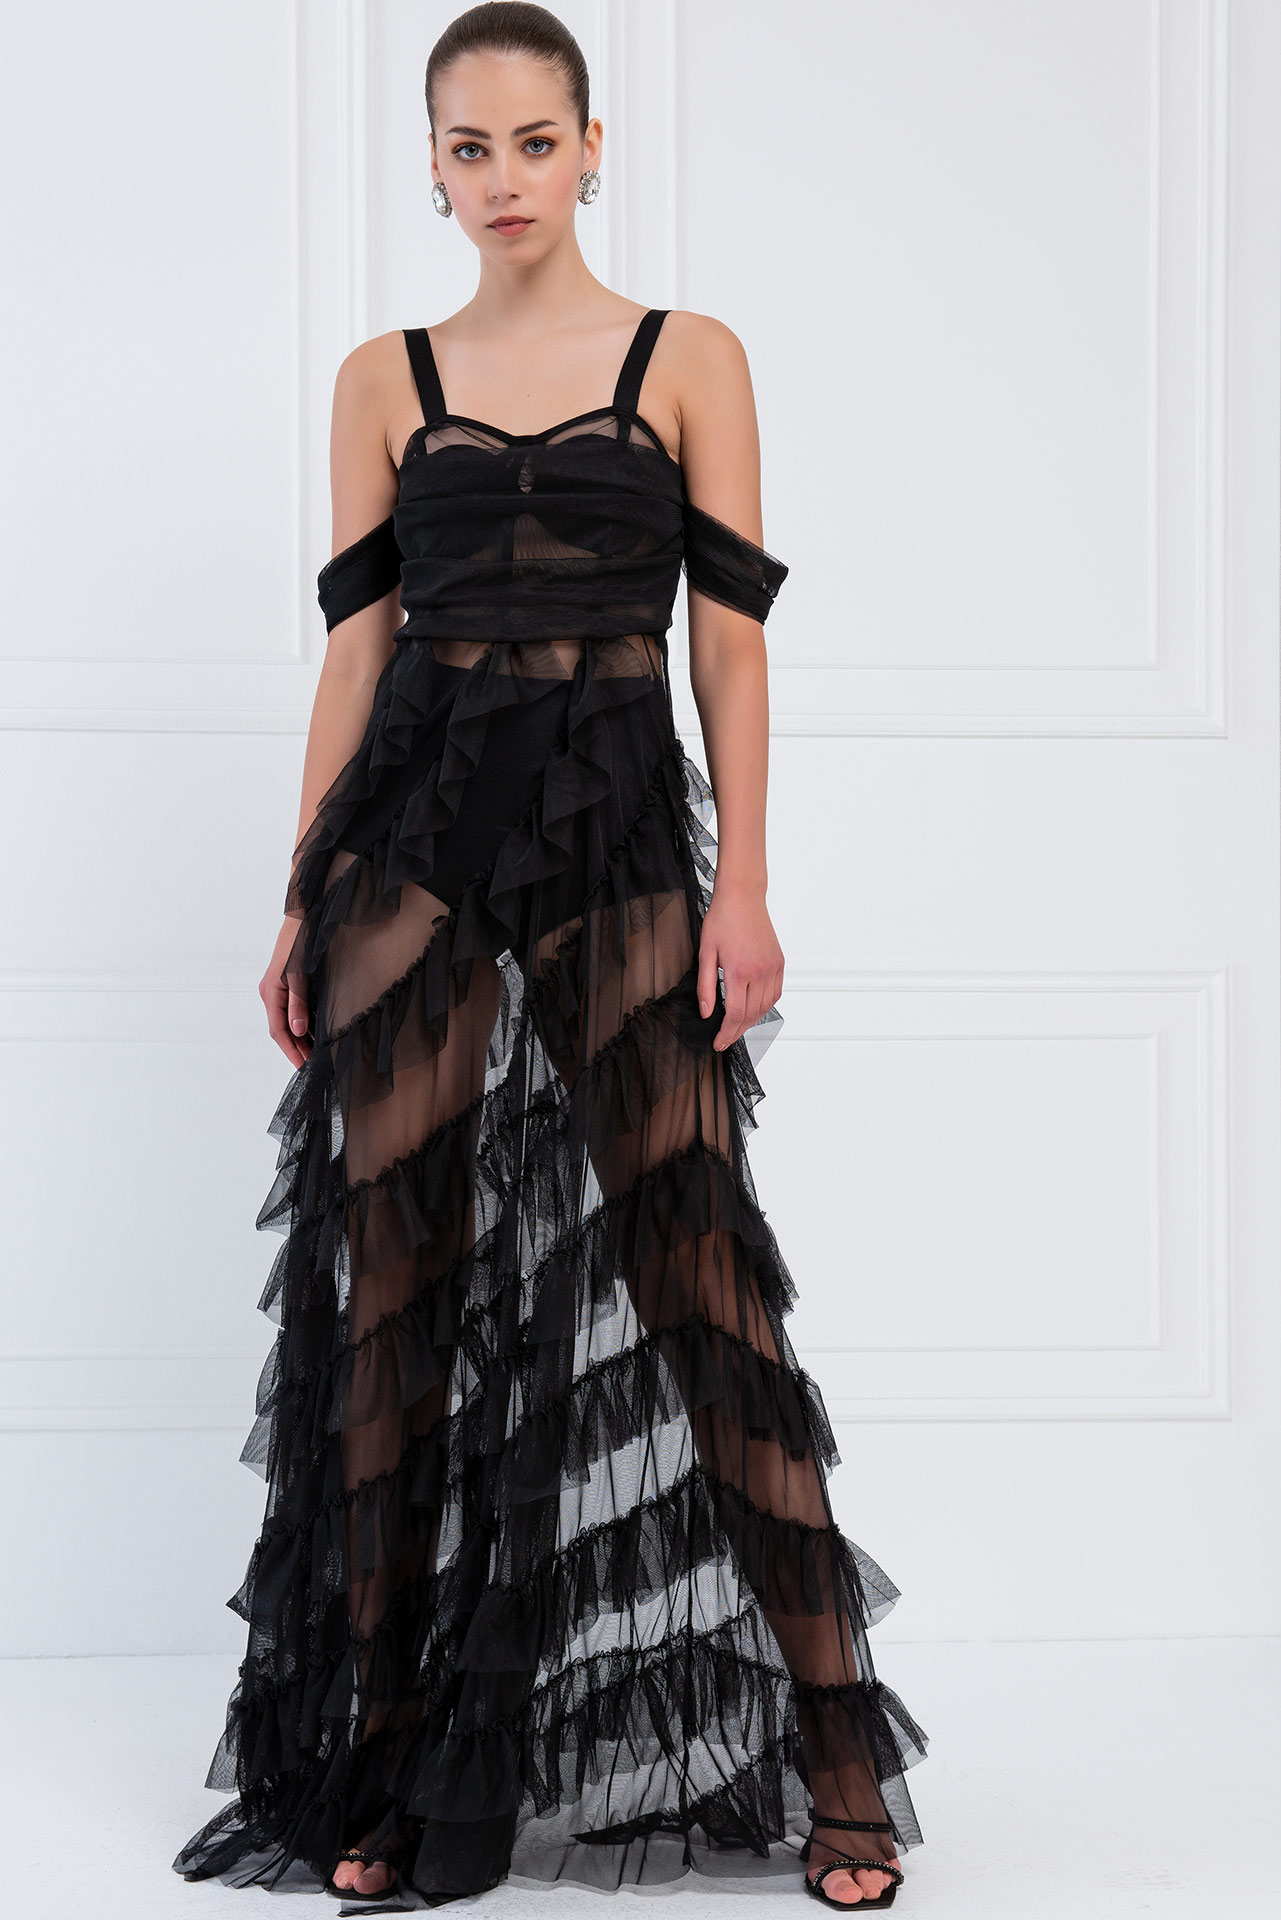 Bella Style Black-Offwhite Dress